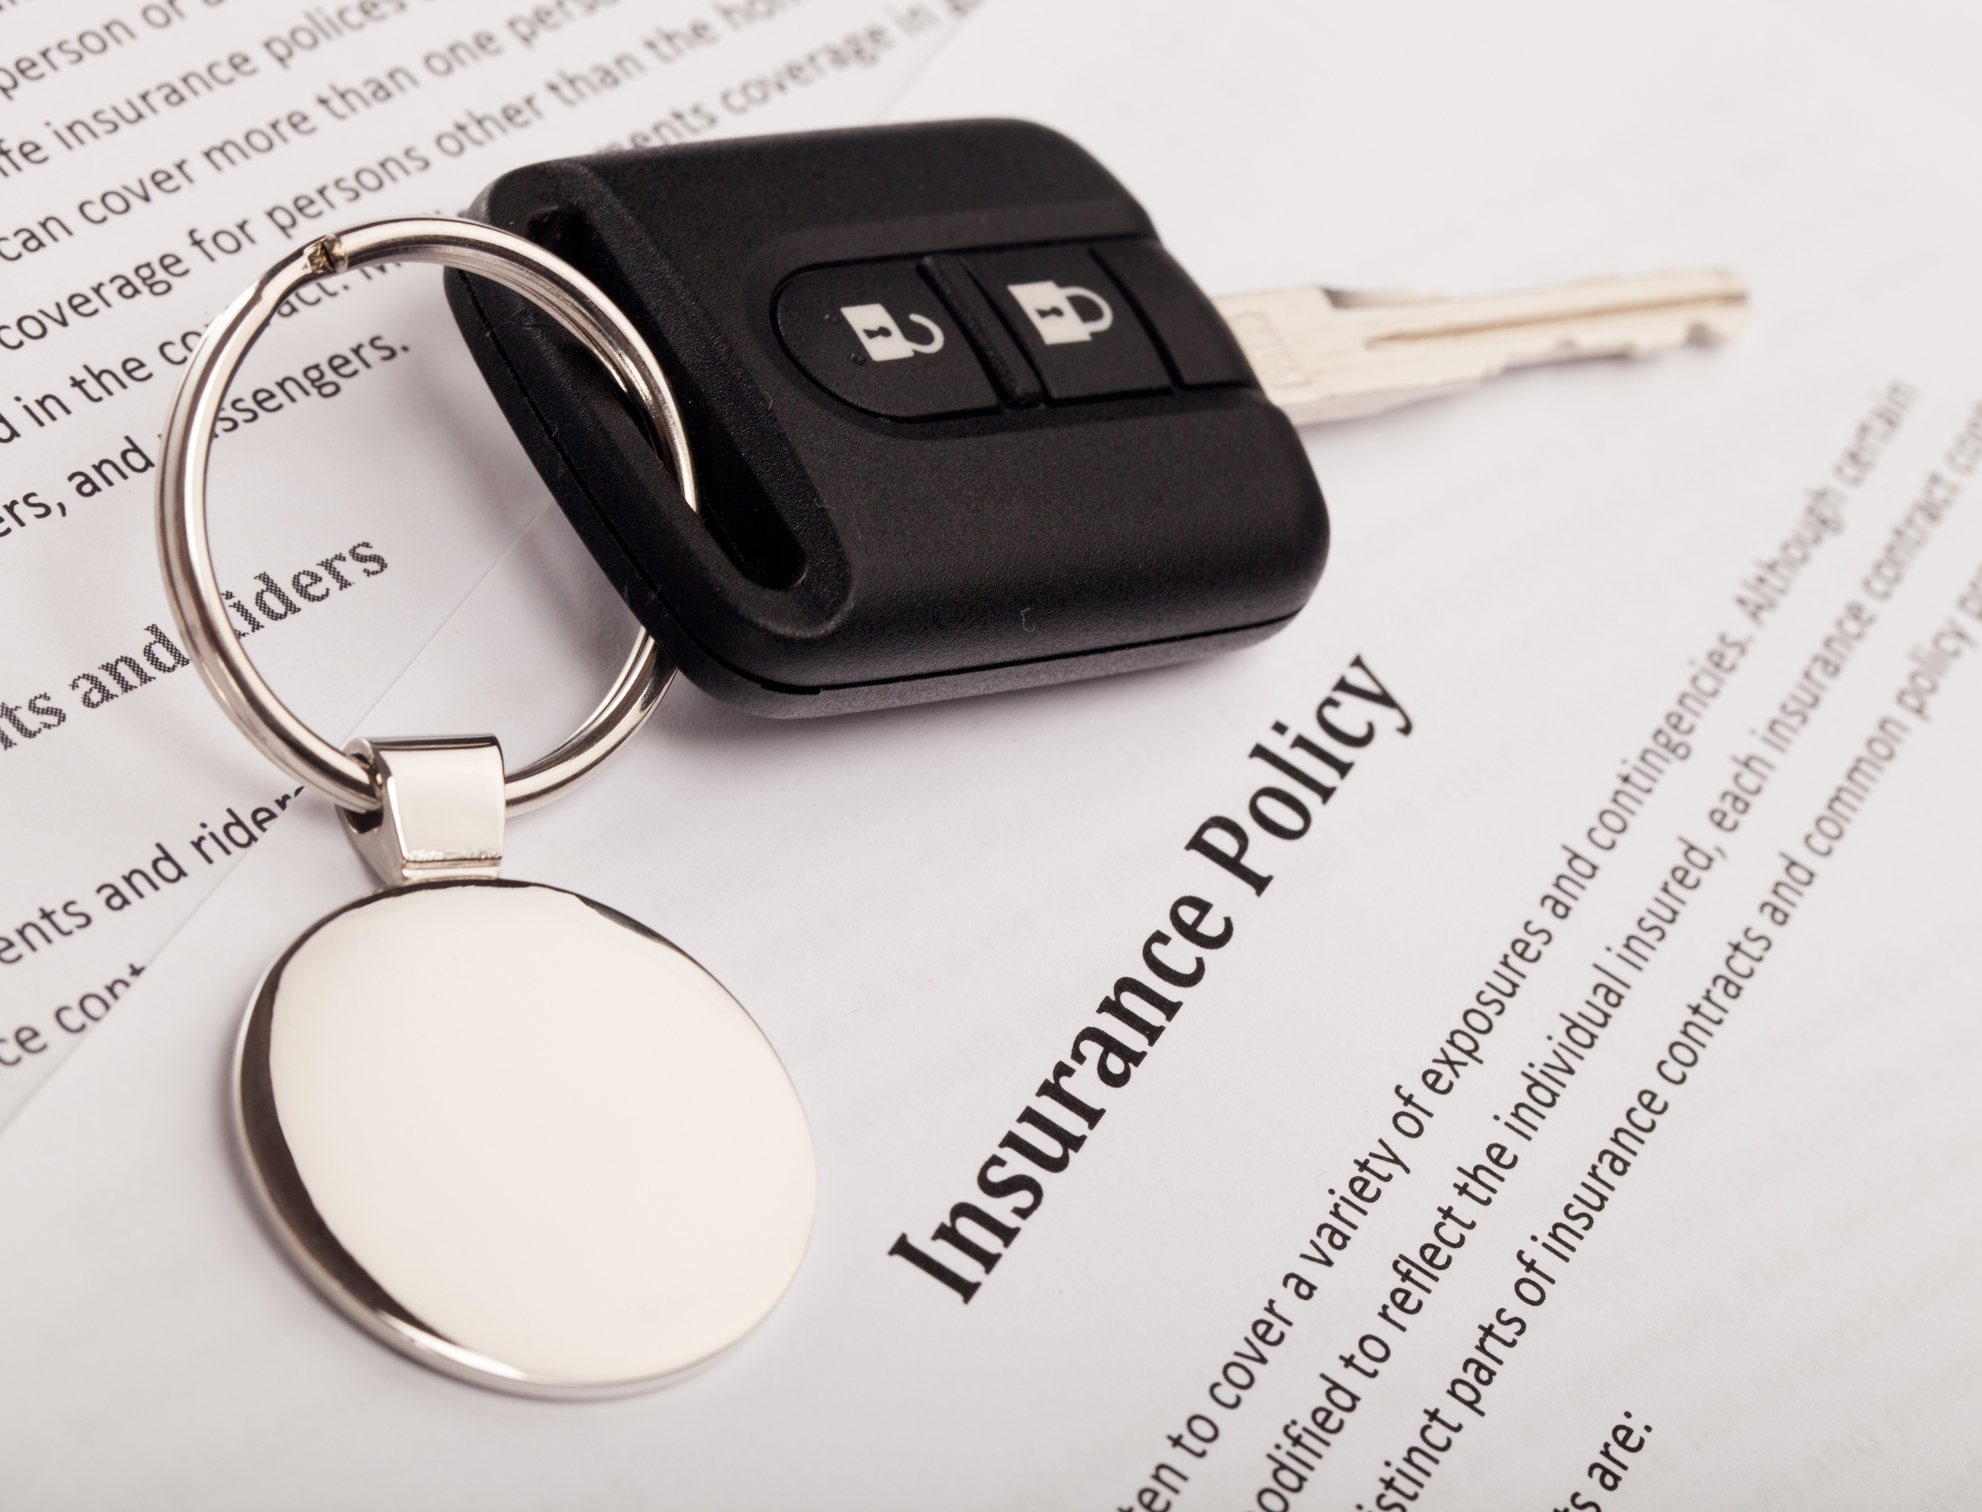 Car keys - Uninsured Driver